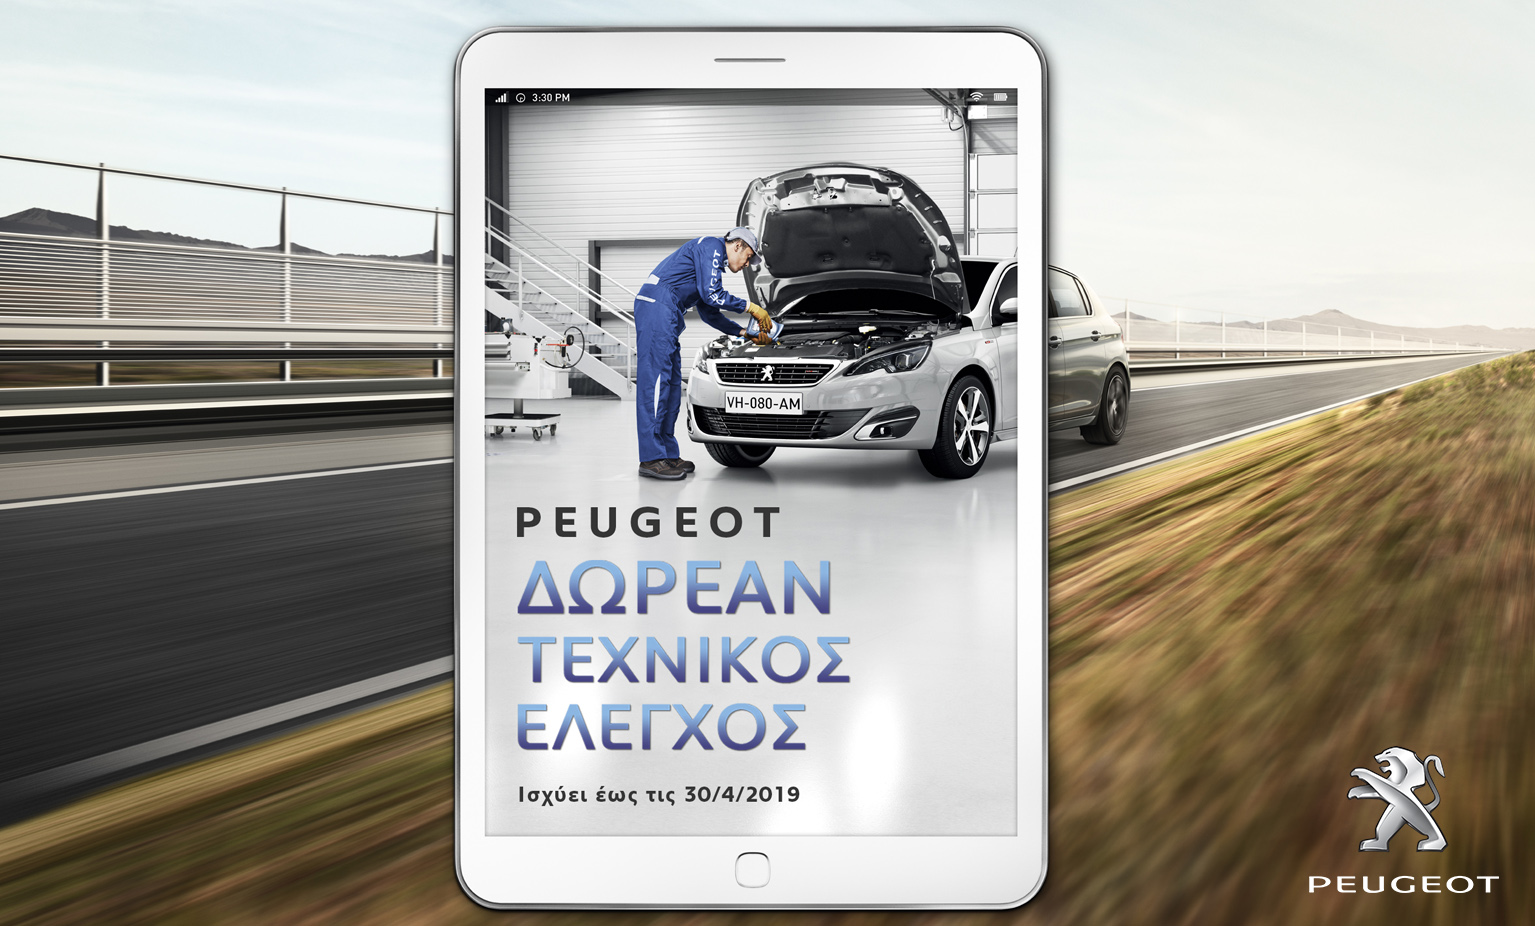 peugeot easter chec 1b 2019 Δωρεάν έλεγχος από την Peugeot